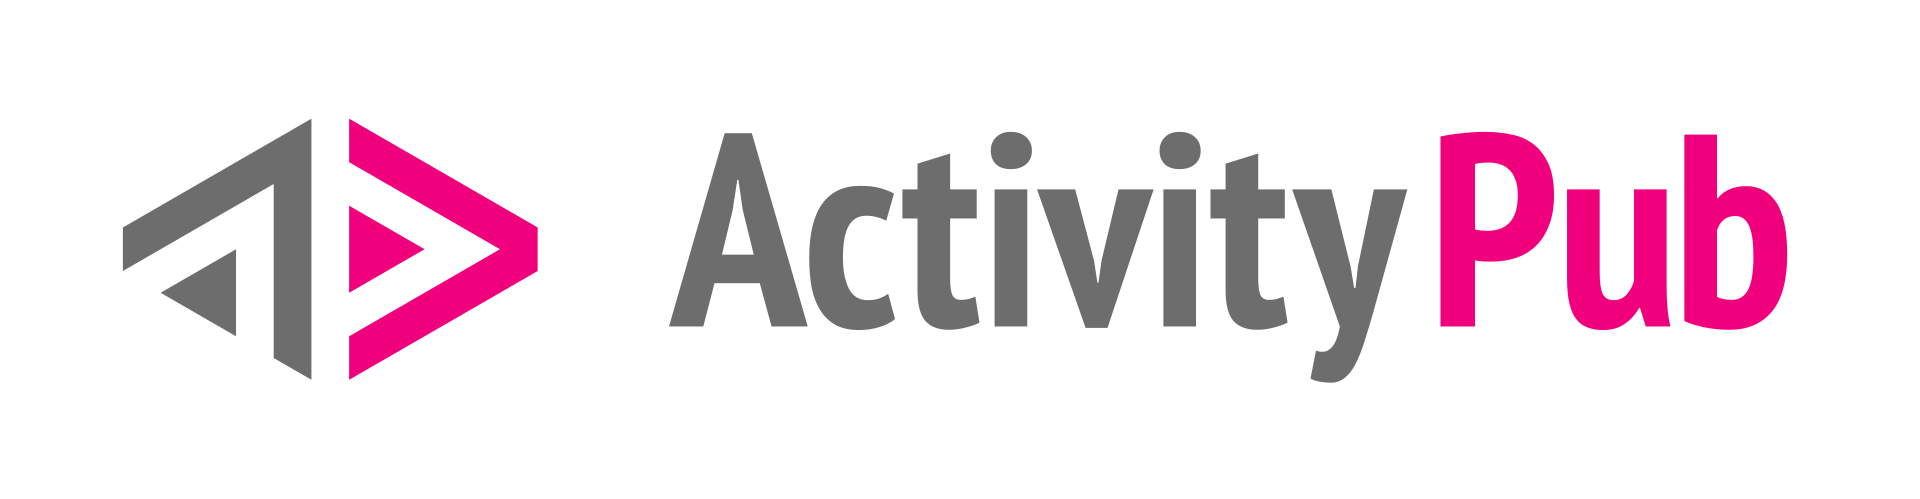 :activitypub_logo: